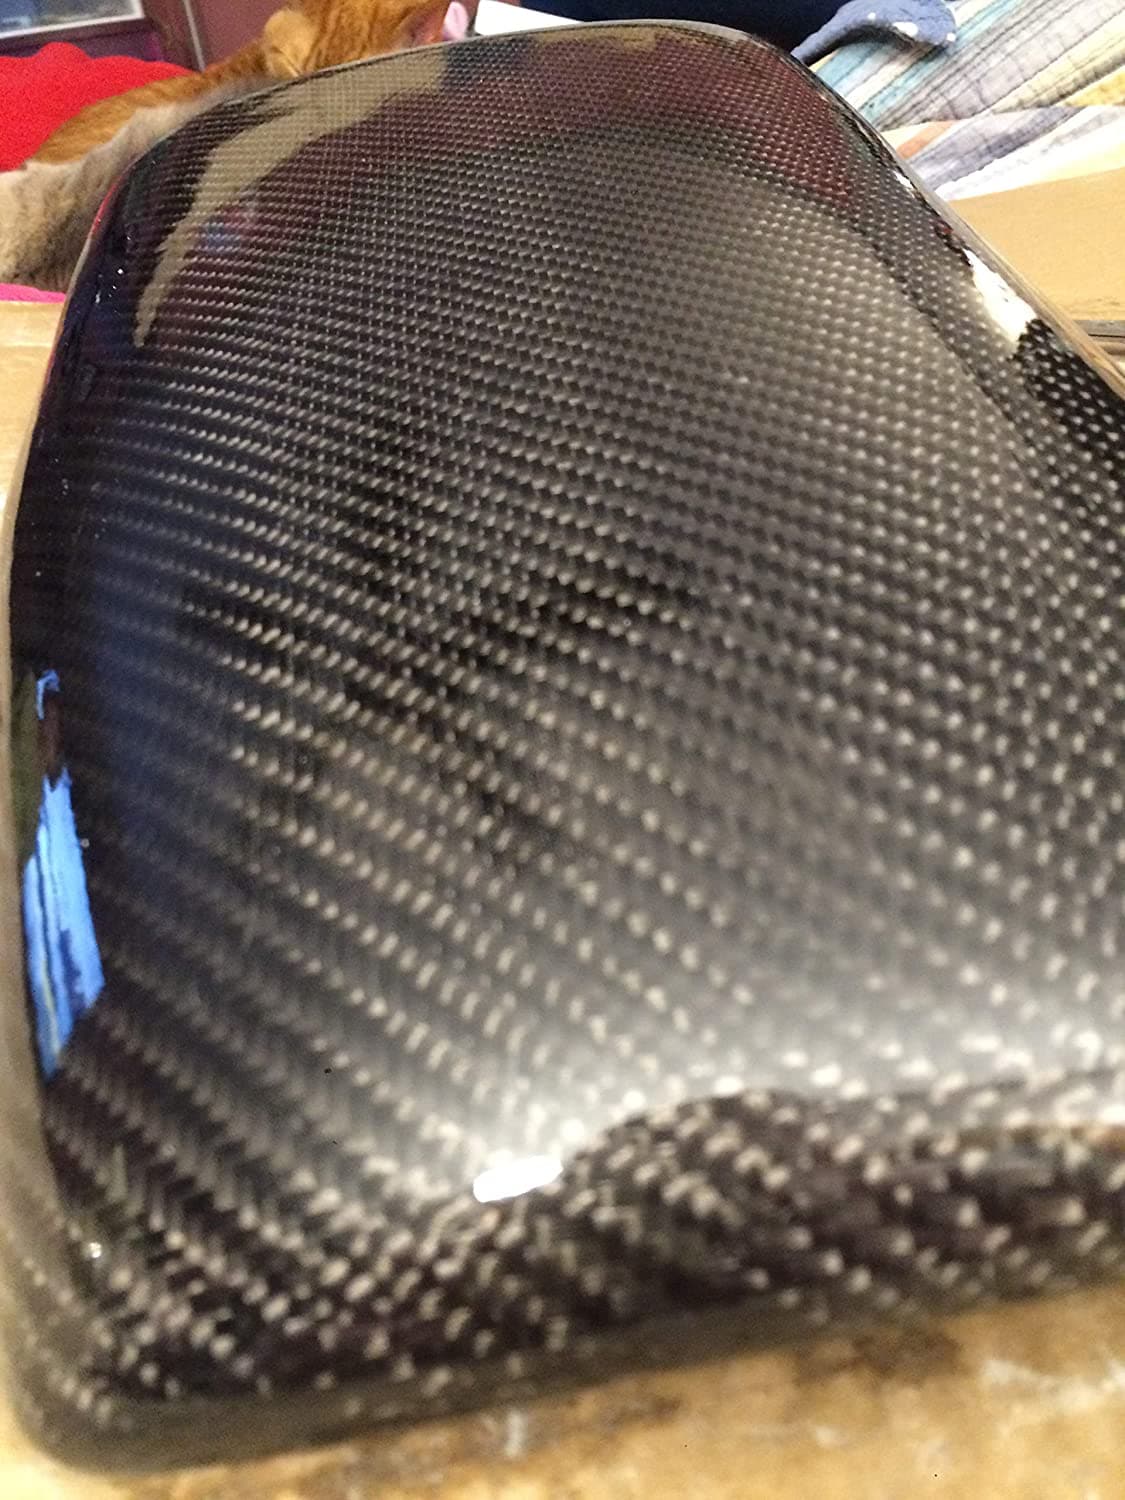 Carbon Fiber Sheet-2x2 Twill Weave Cloth - TRUE COMPOSITES